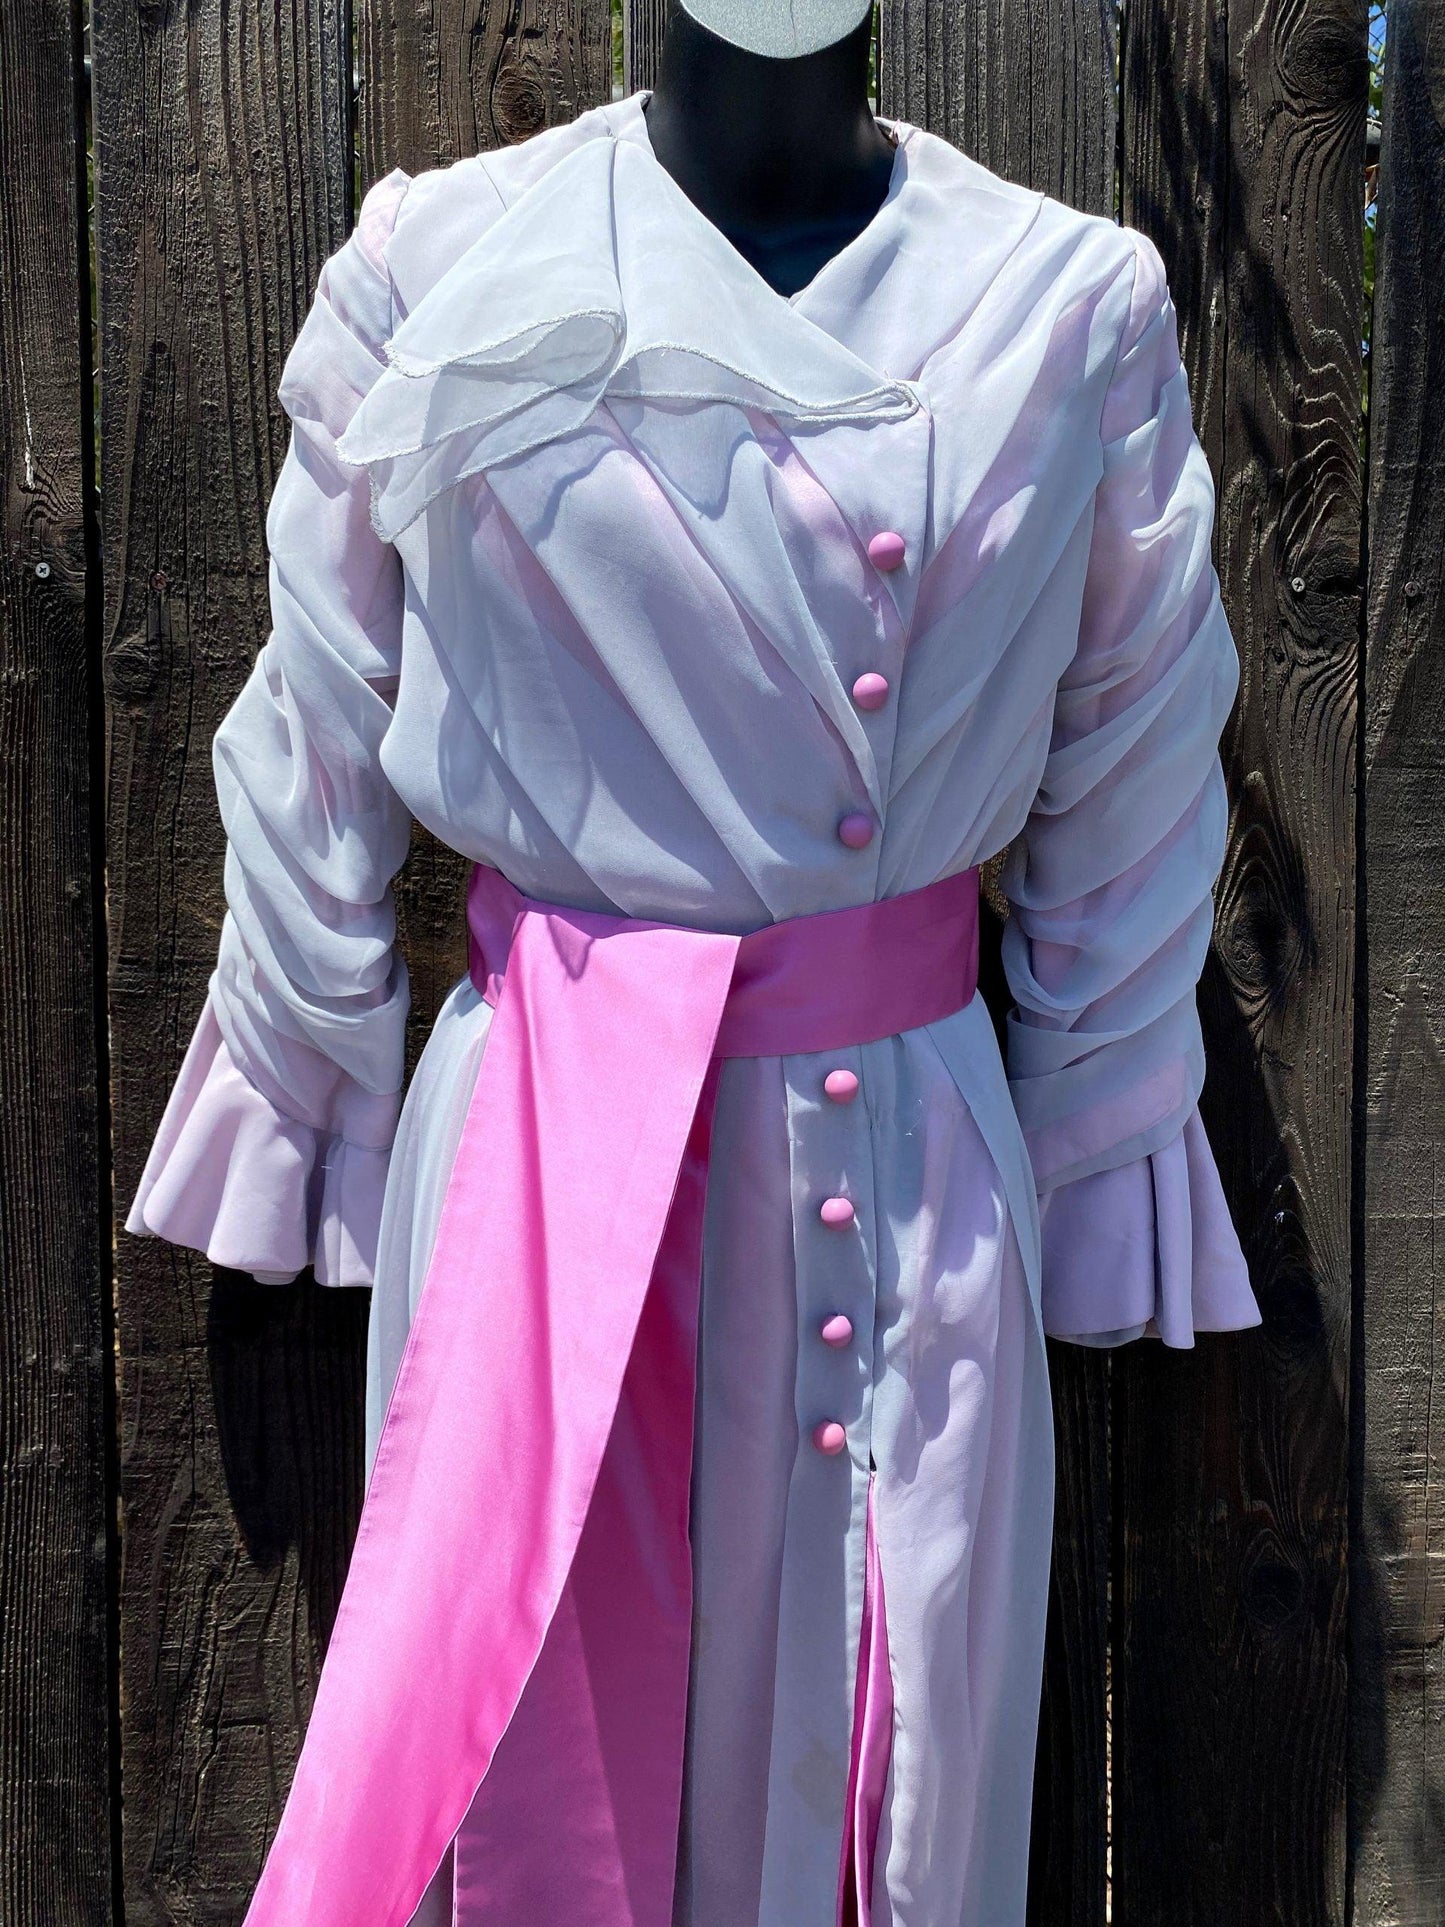 Edwardian Style Morning Day Dress With Pink Satin Details - A Walk Thru Time Vintage